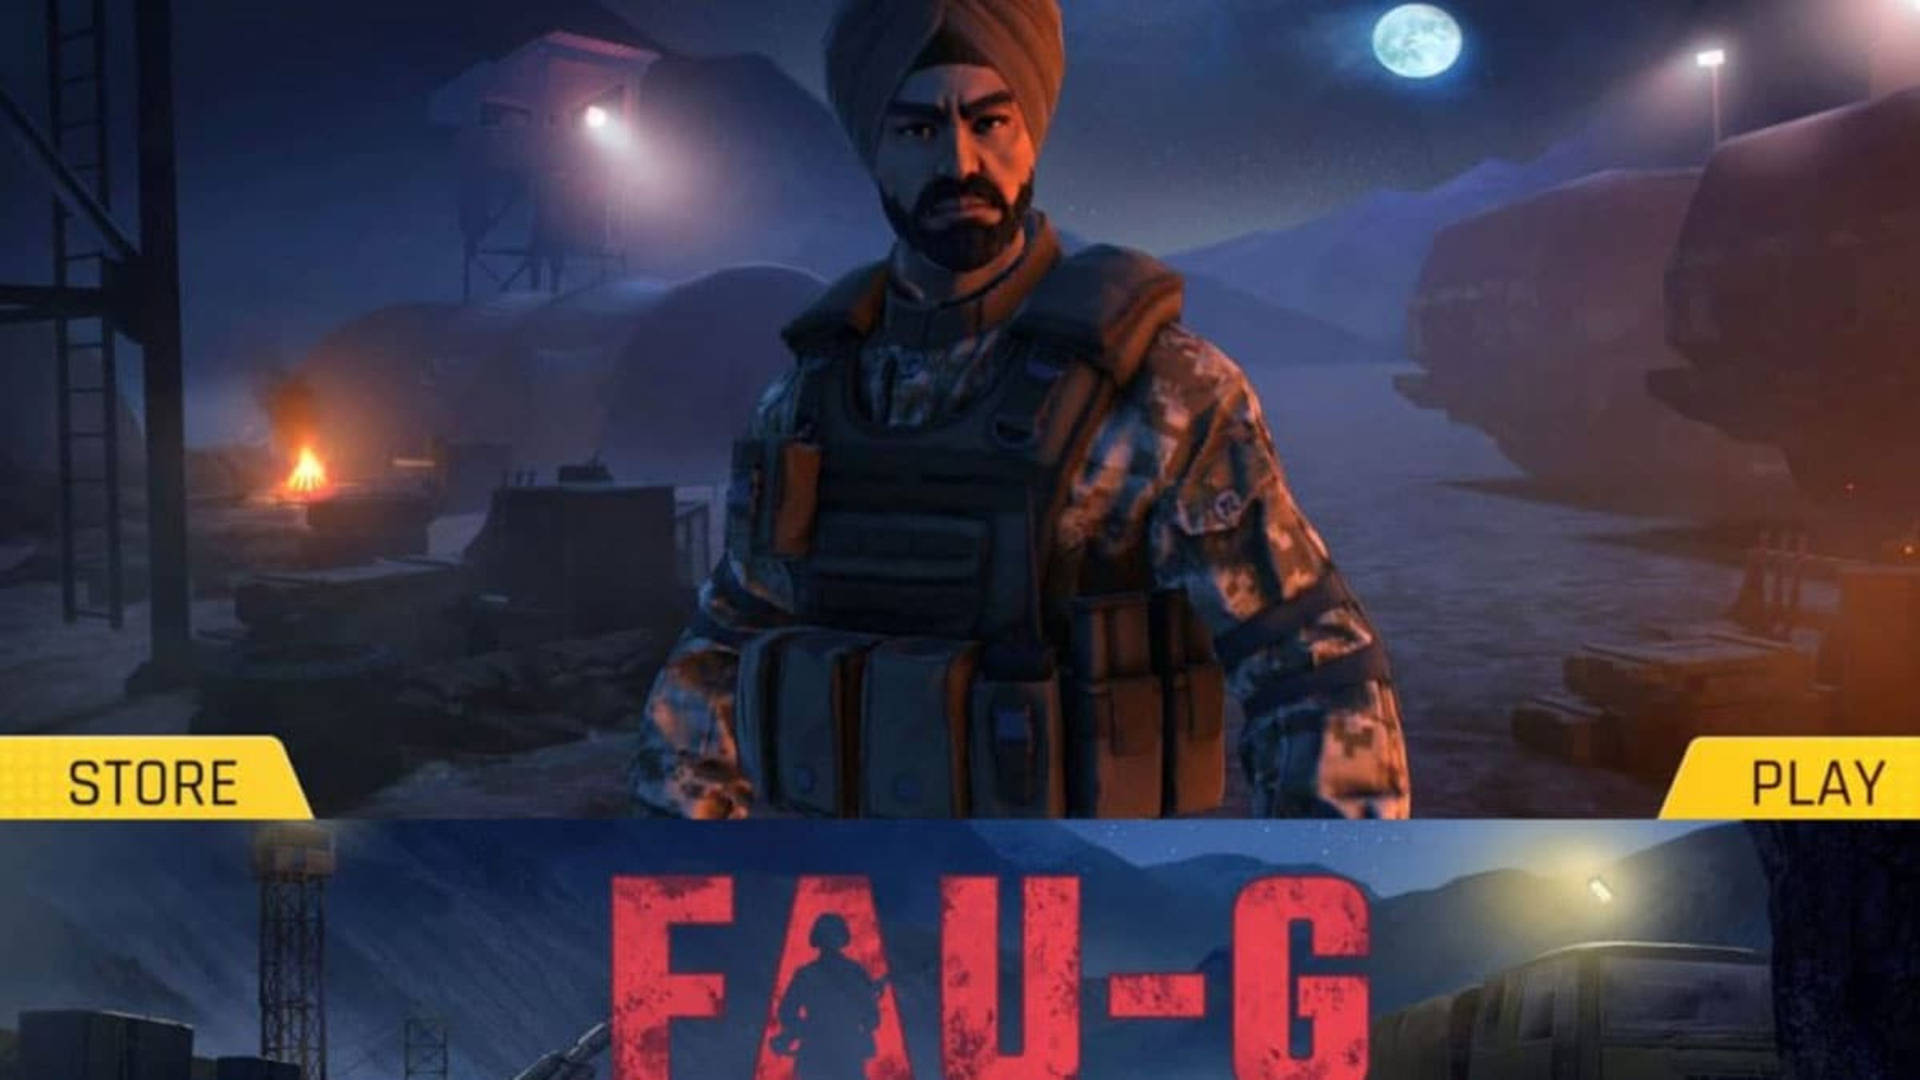 Commanderchillon Fau-g Spiel-screenshot Wallpaper